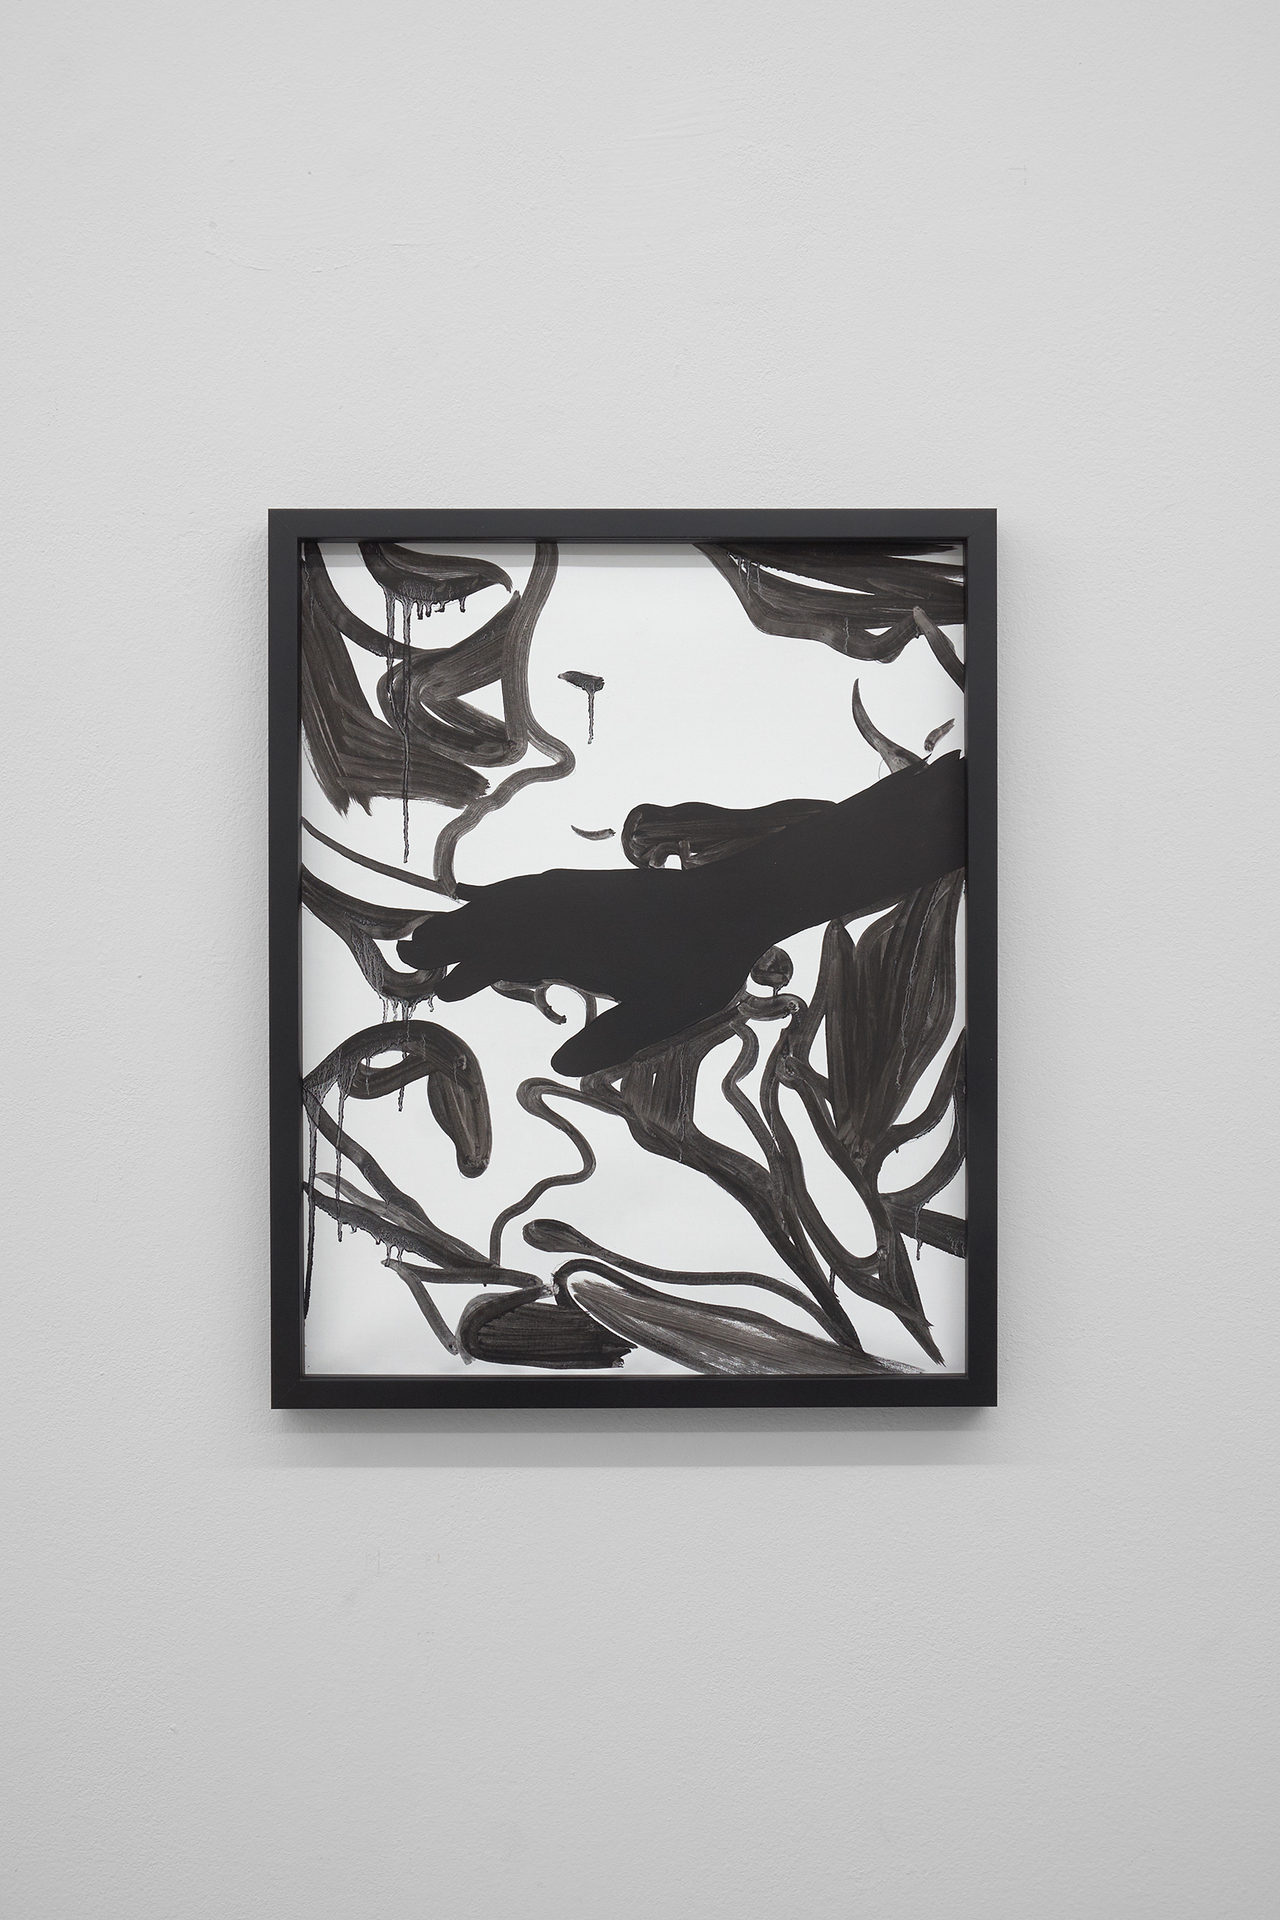 Gabriel Stoian, Light touch, 2020, oil on canvas, 40x50cm.